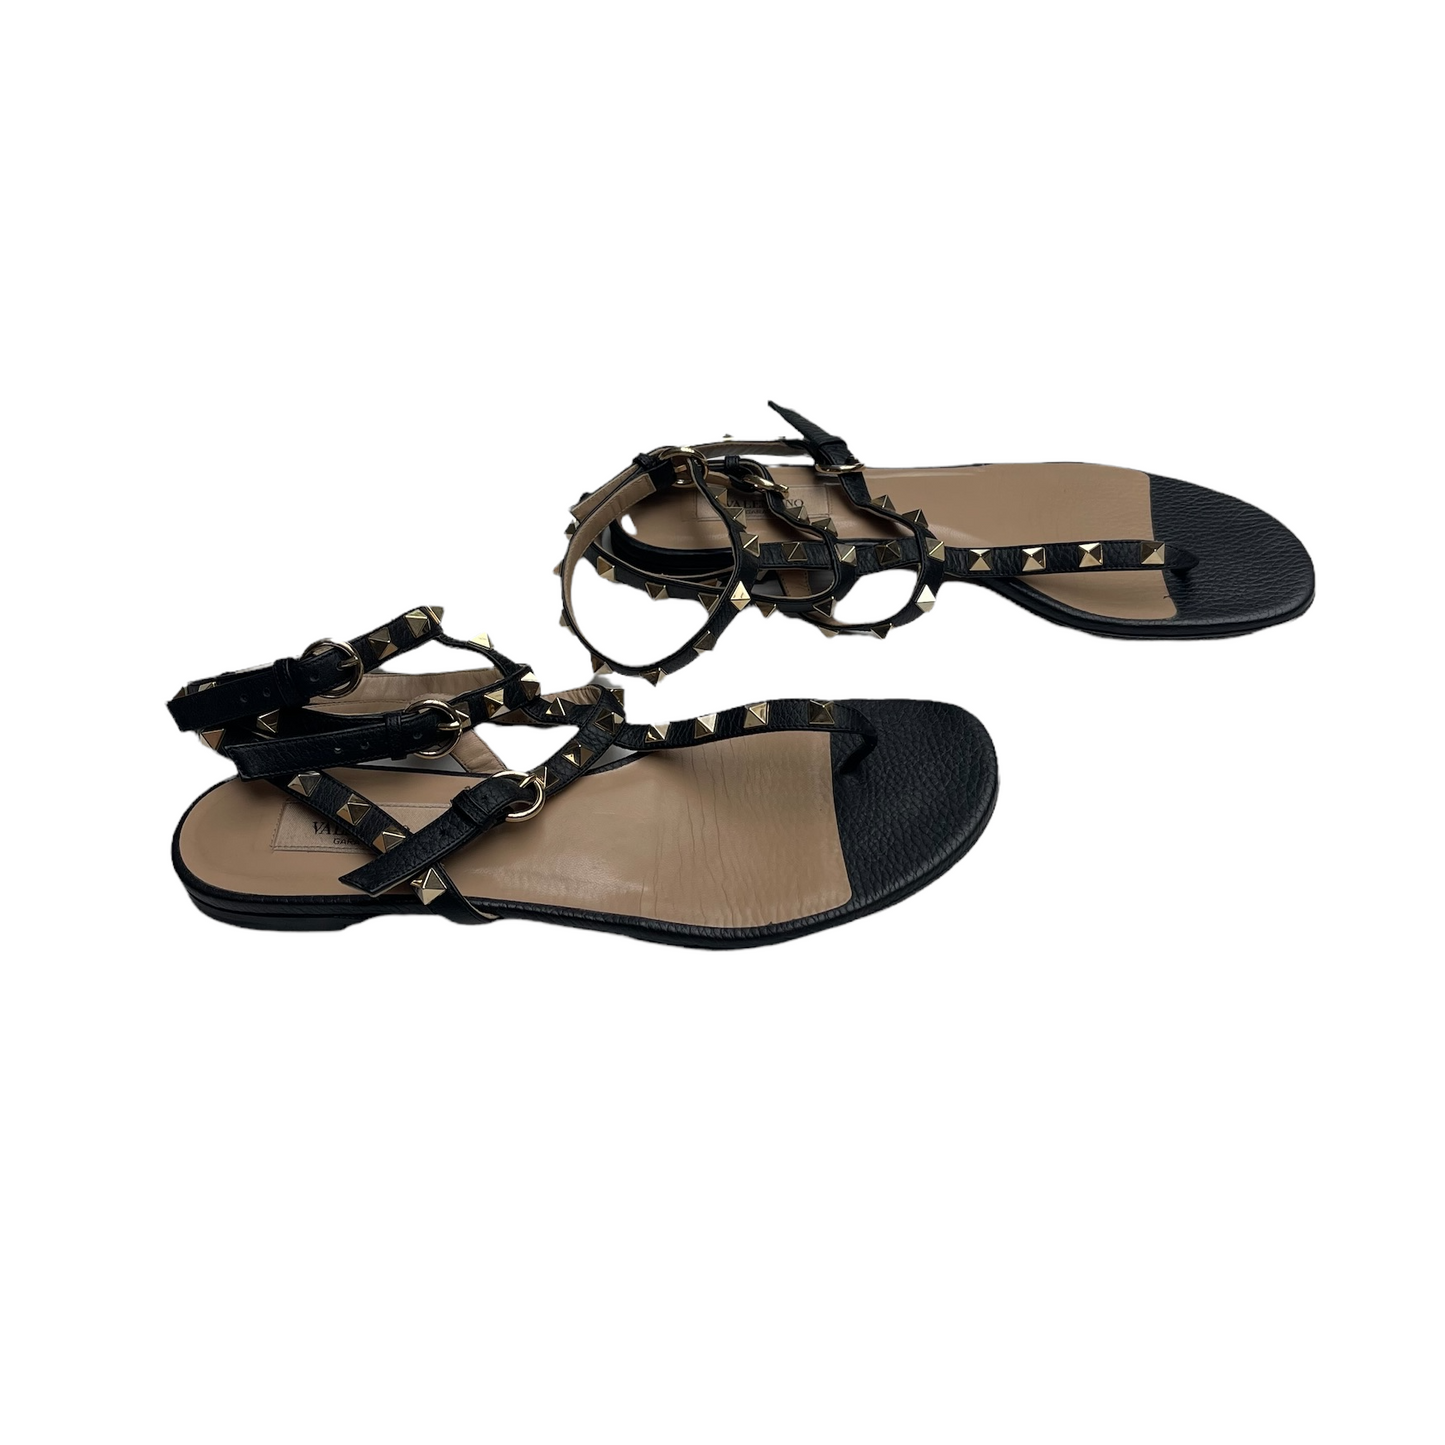 Black Leather Gladiator Sandals - 8